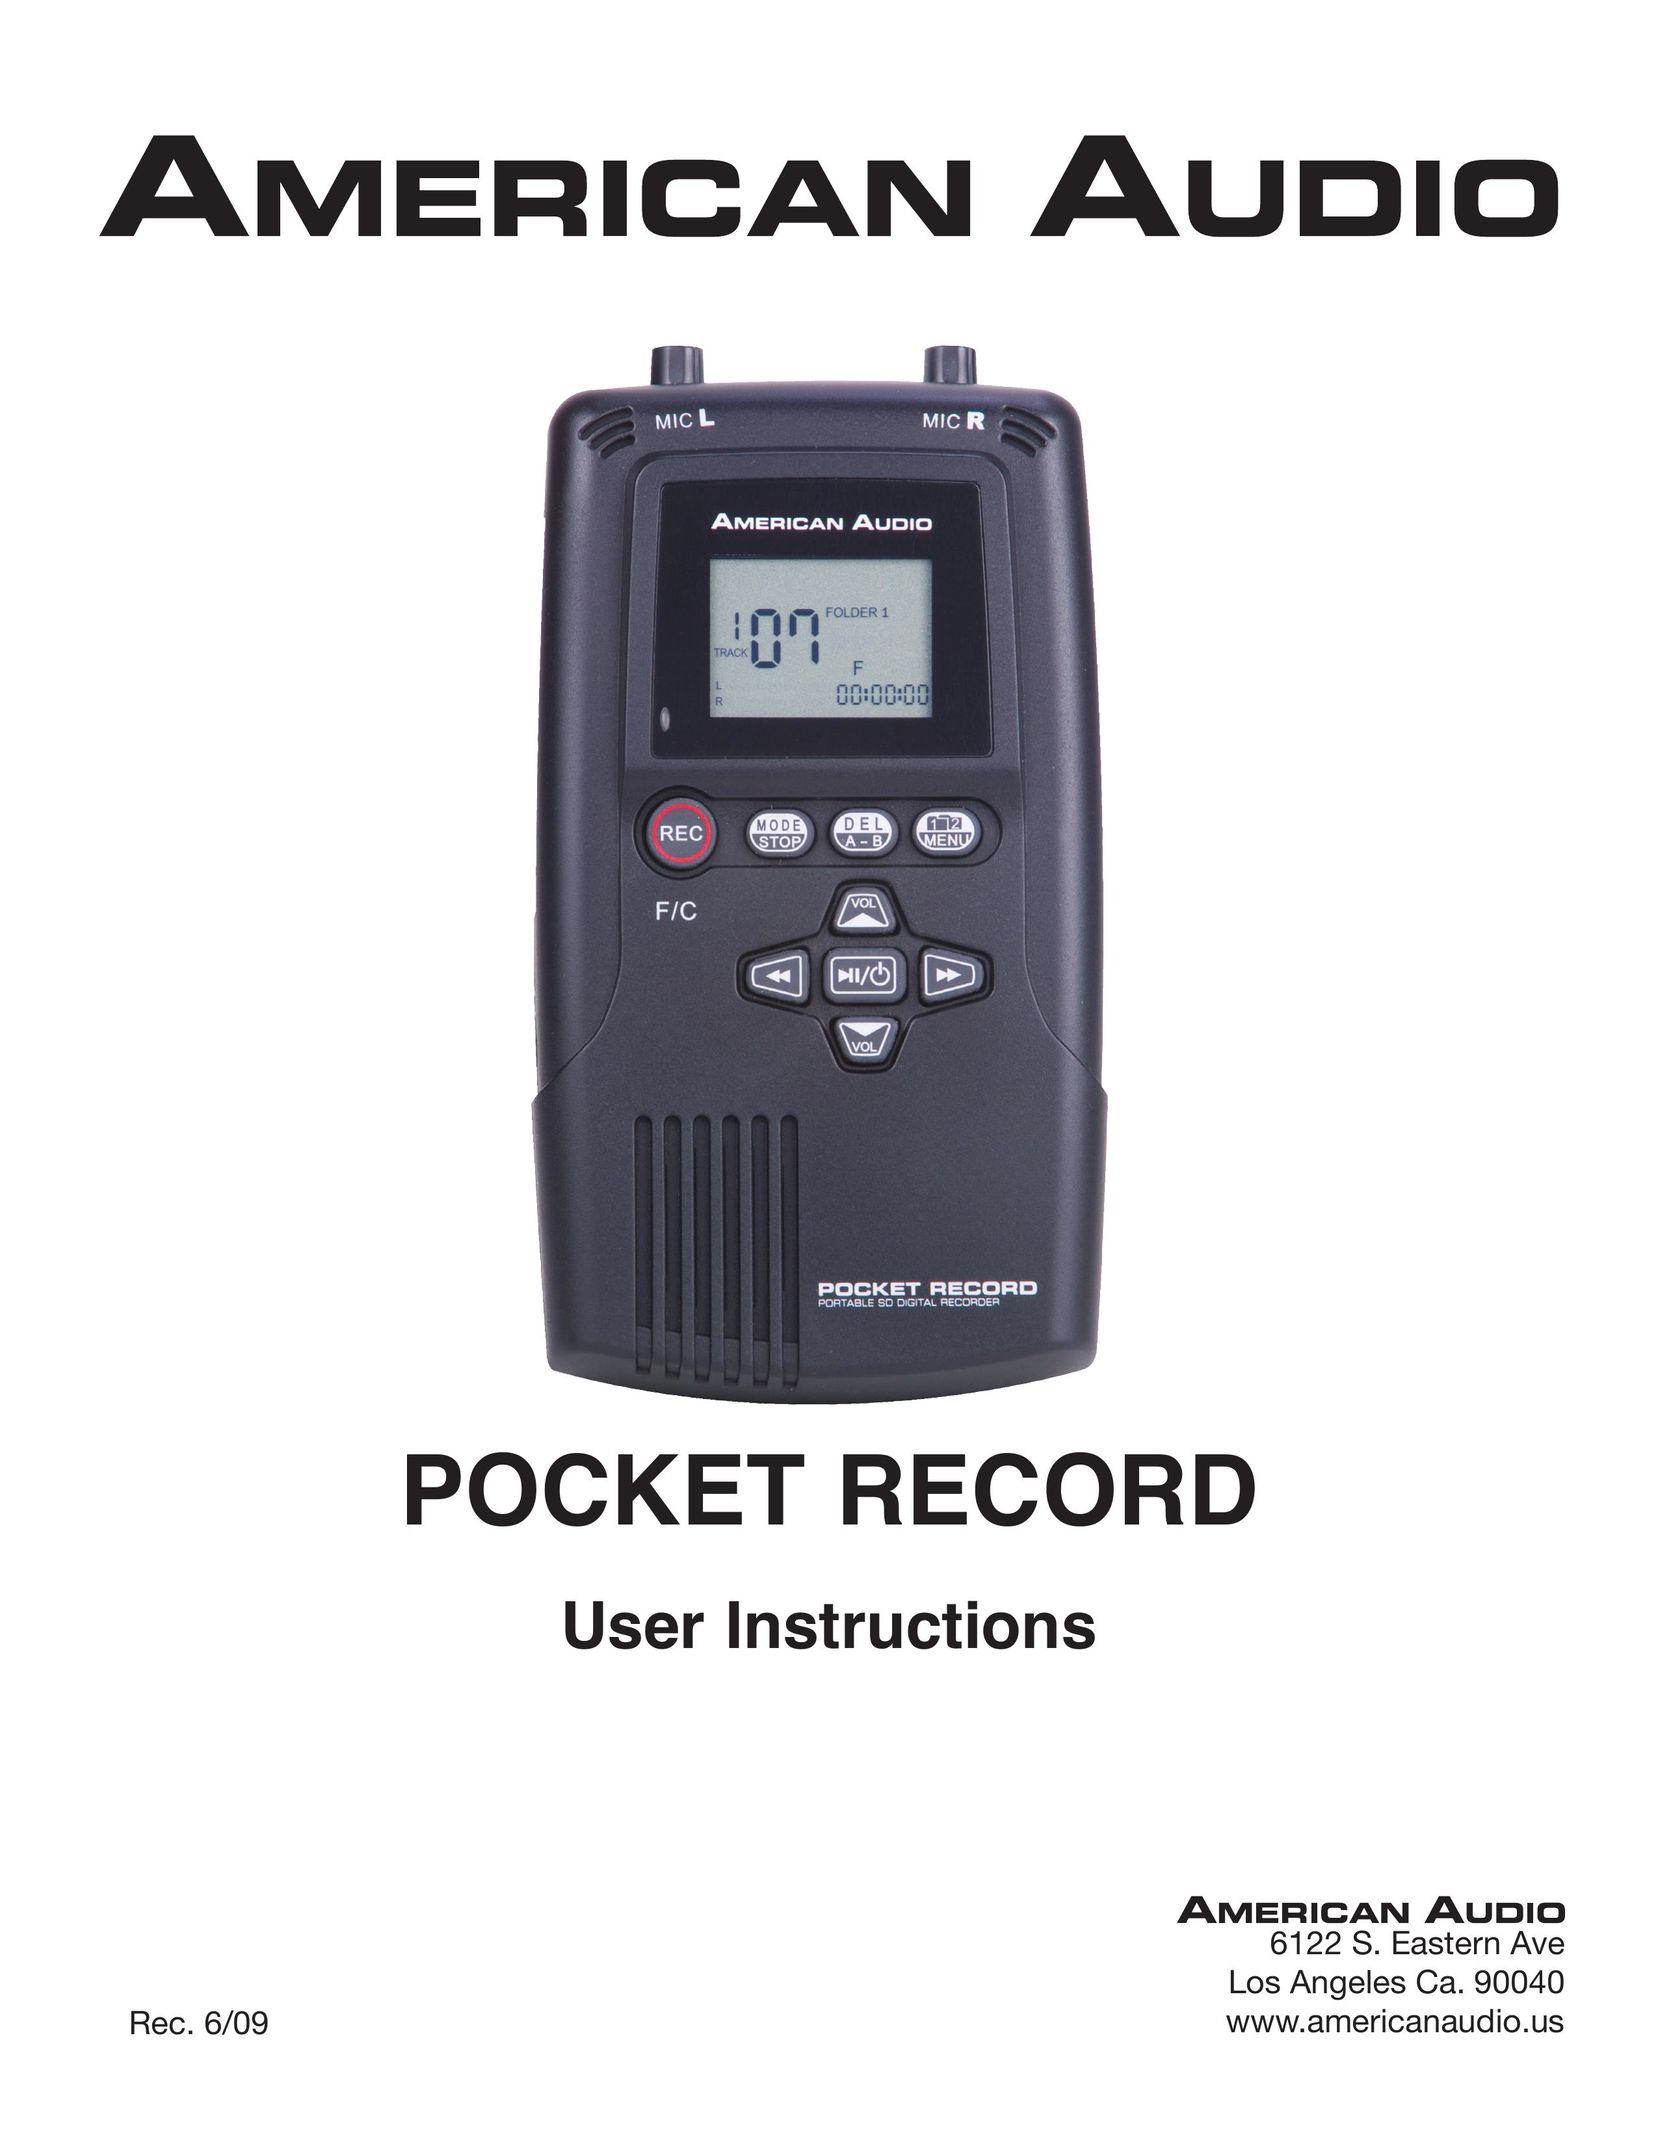 American Audio Pocket Record MP3 Player User Manual